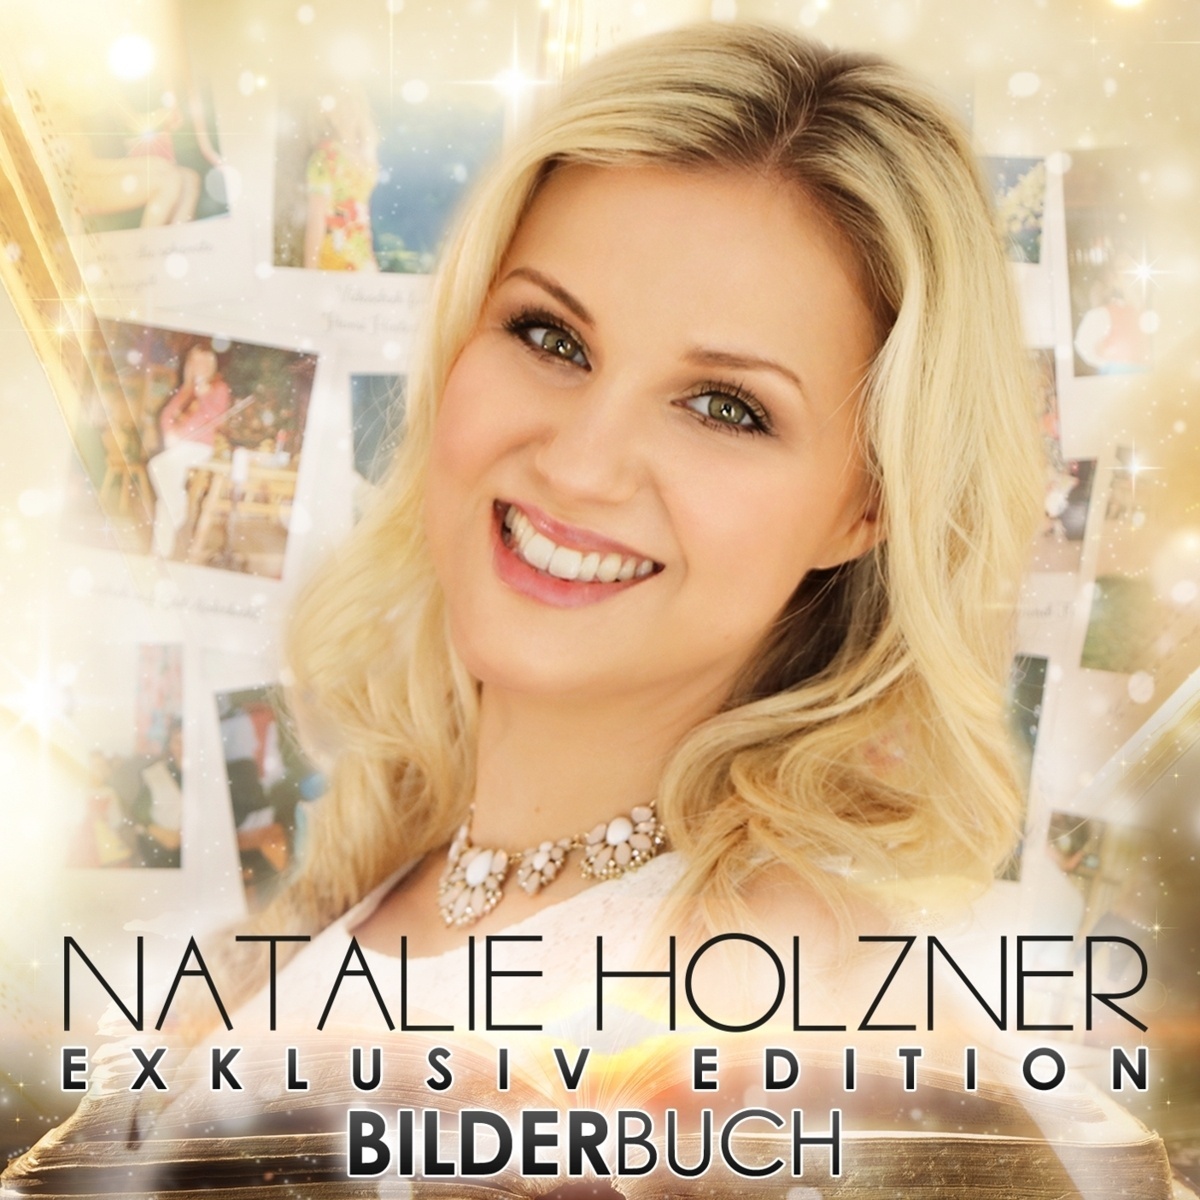 Bilderbuch-Exklusivedition - Natalie Holzner. (CD)